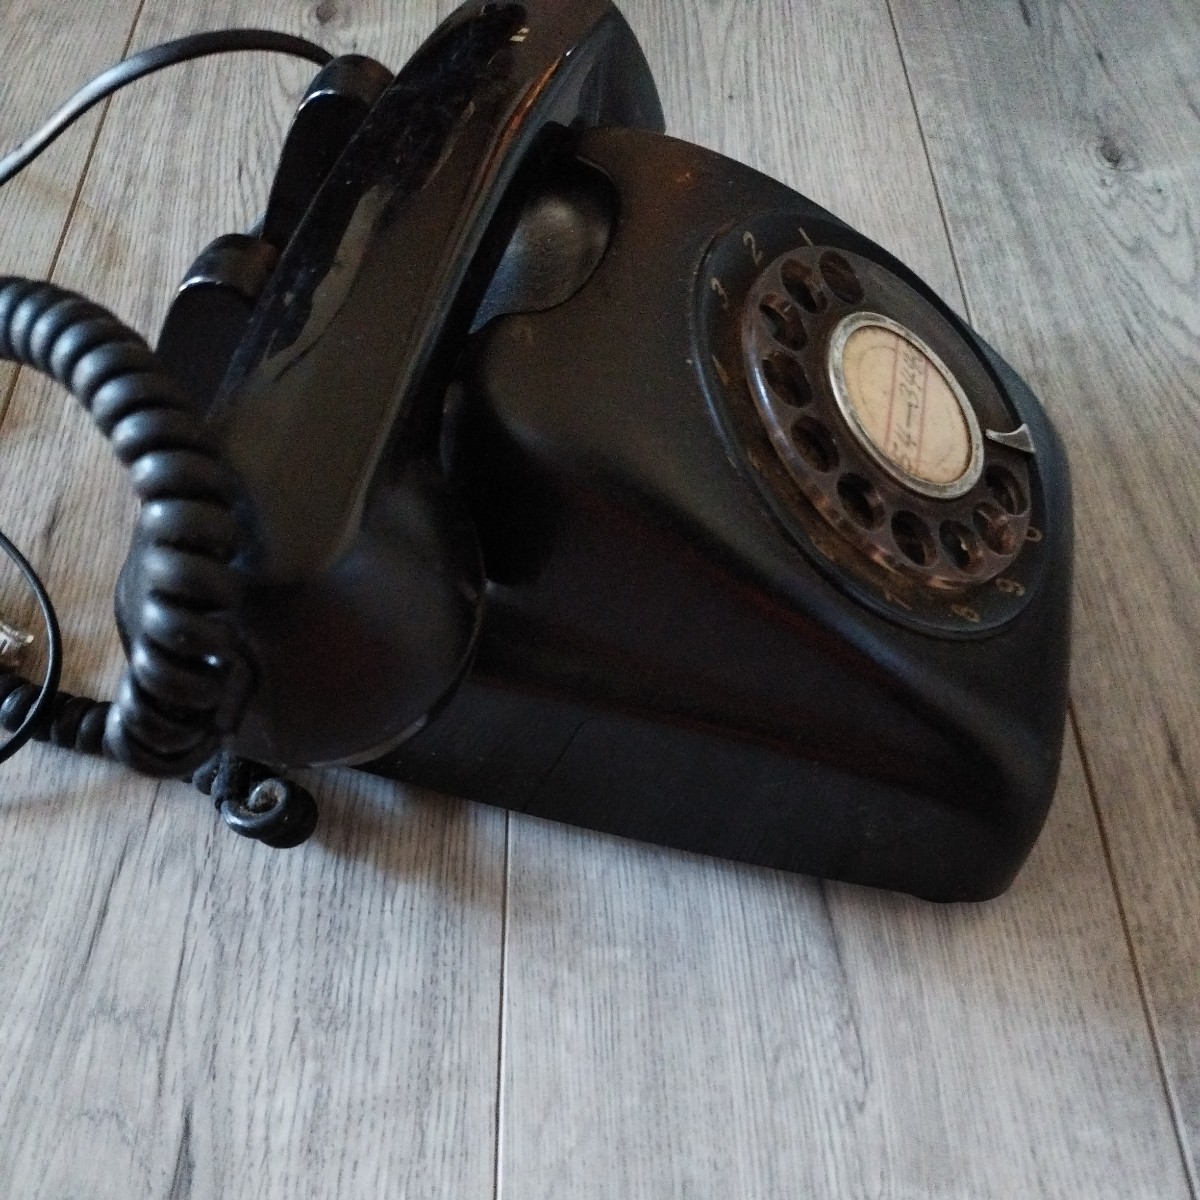  Junk black telephone Toshiba 600-A2